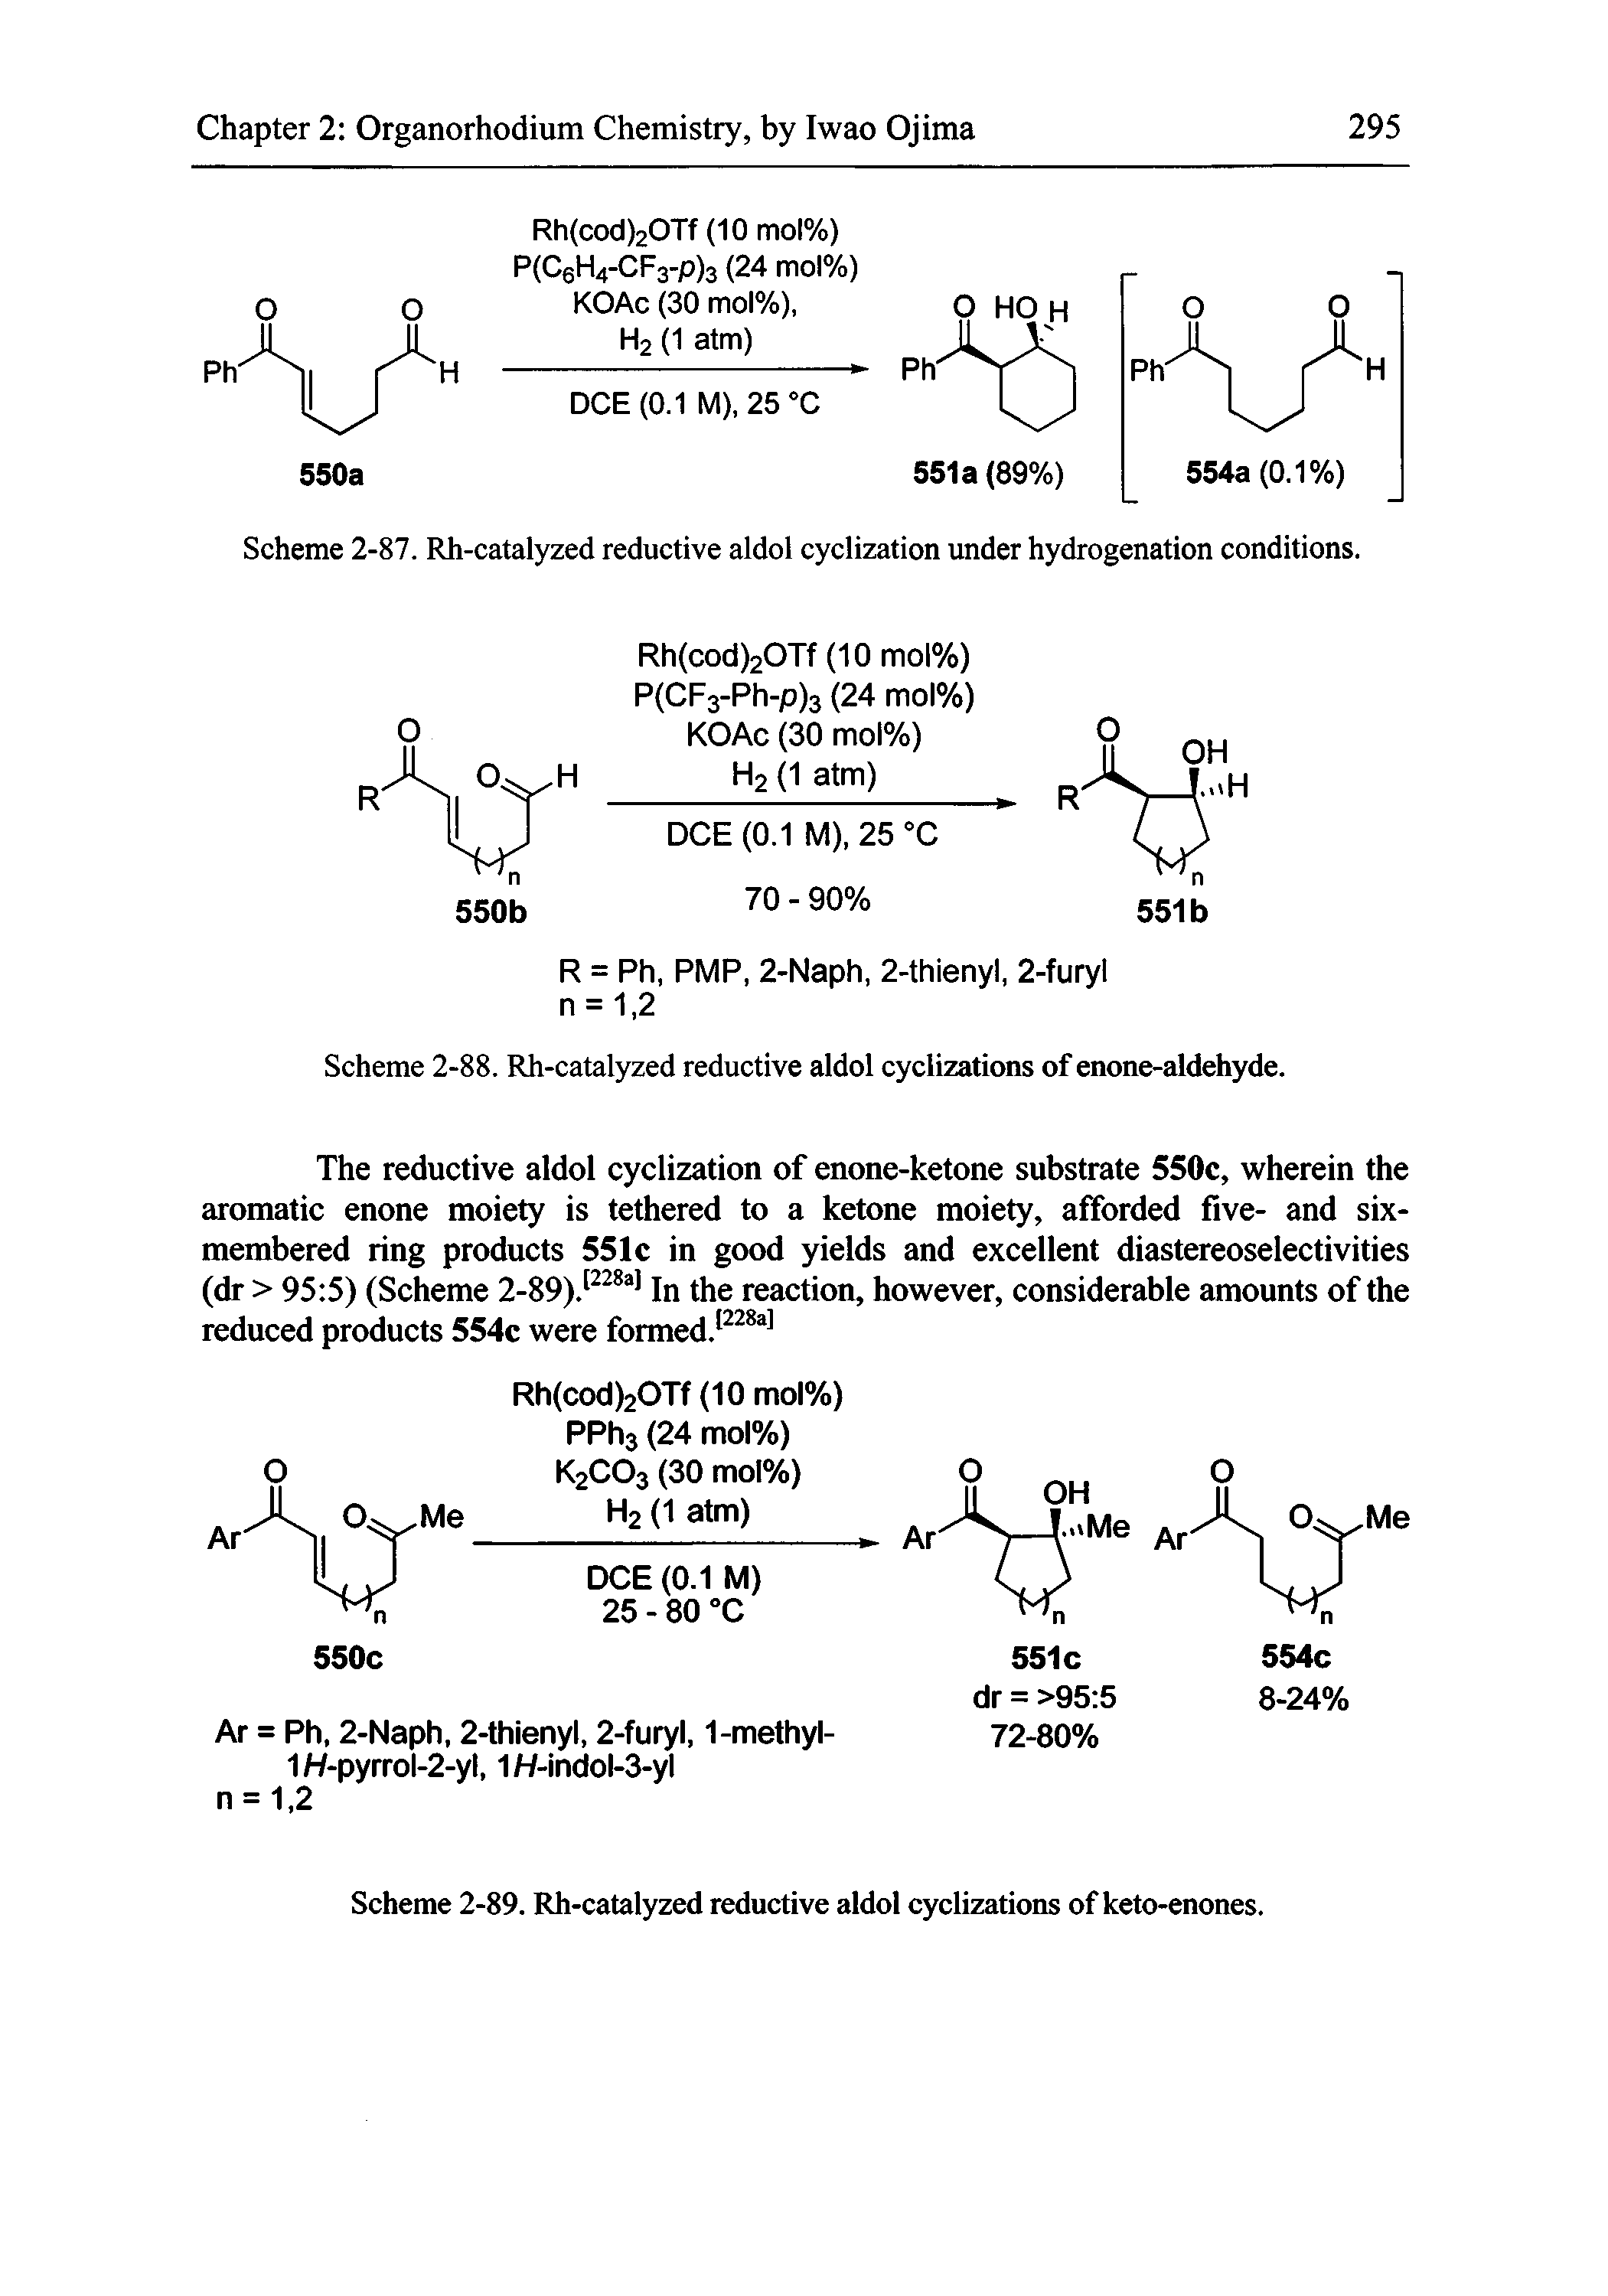 Scheme 2-88. Rh-catalyzed reductive aldol cyclizations of enone-aldehyde.